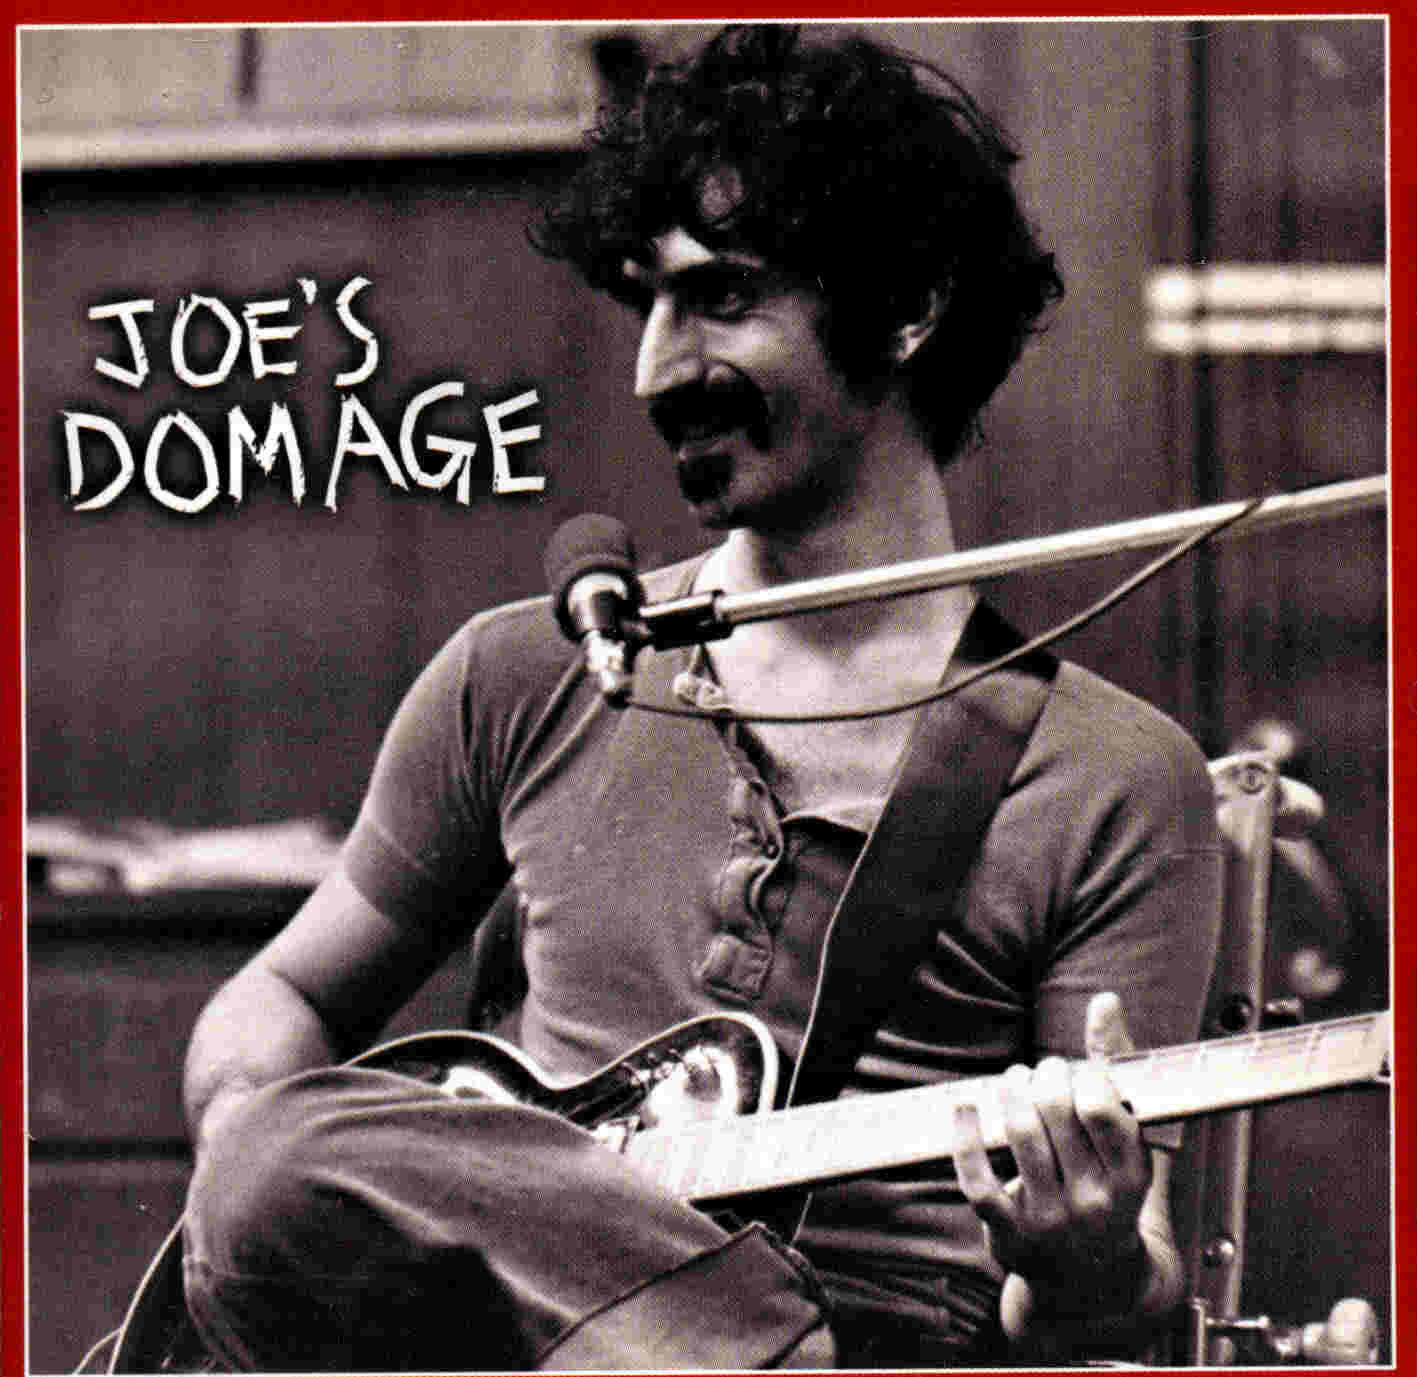 Joe's Domage, 2004